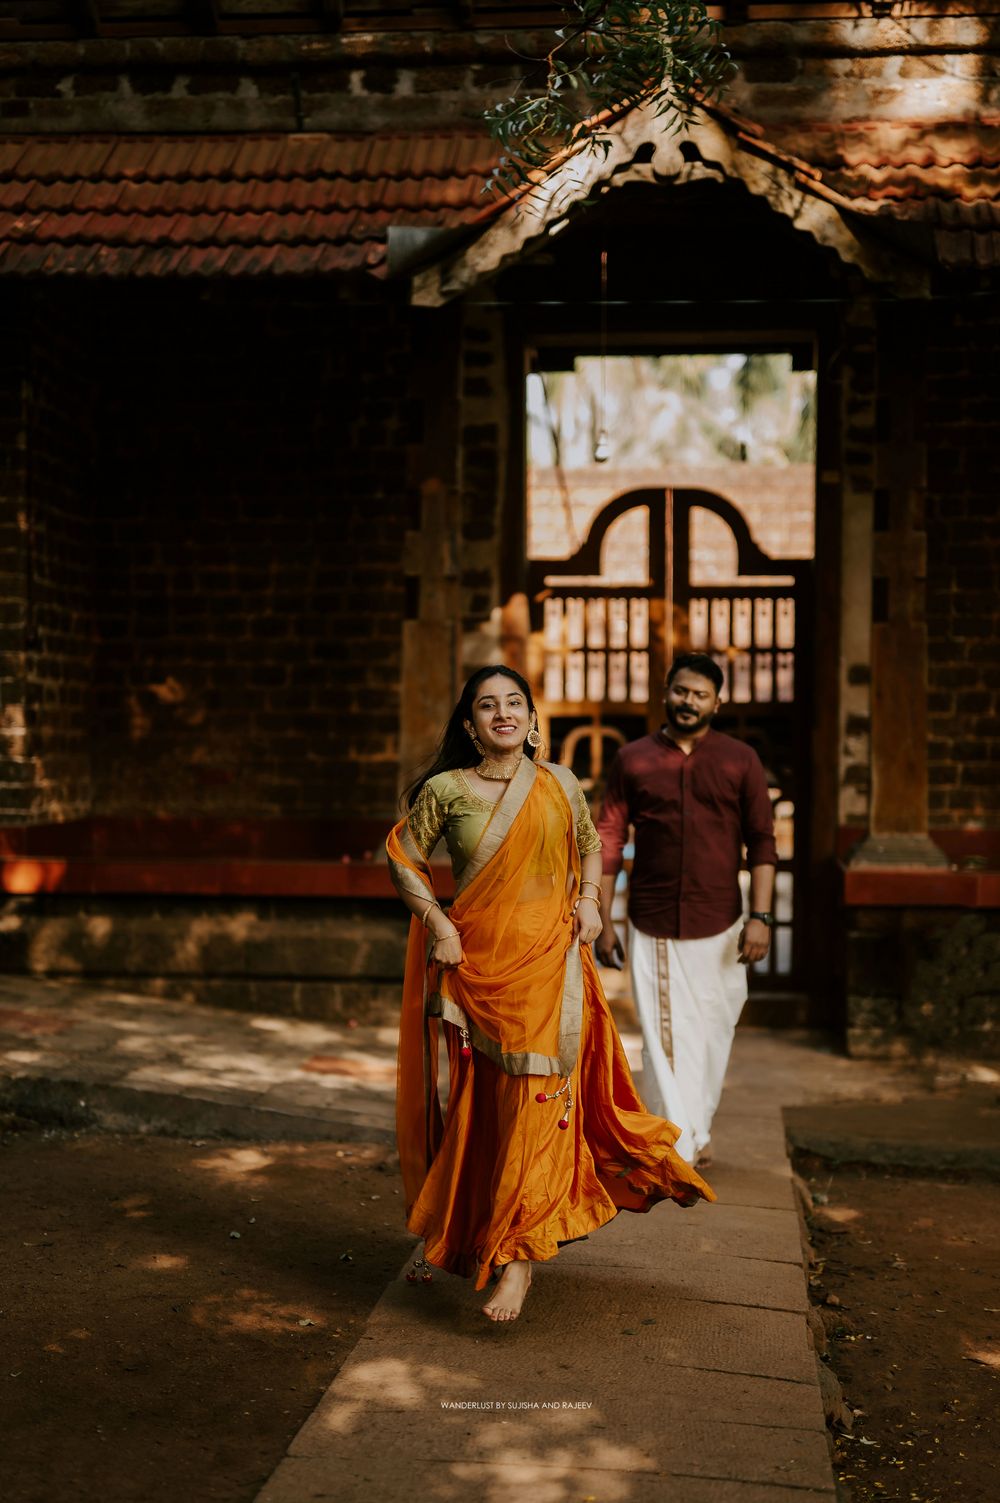 Photo From Vishnu and Vinija - By Wanderlust by Sujisha and Rajeev